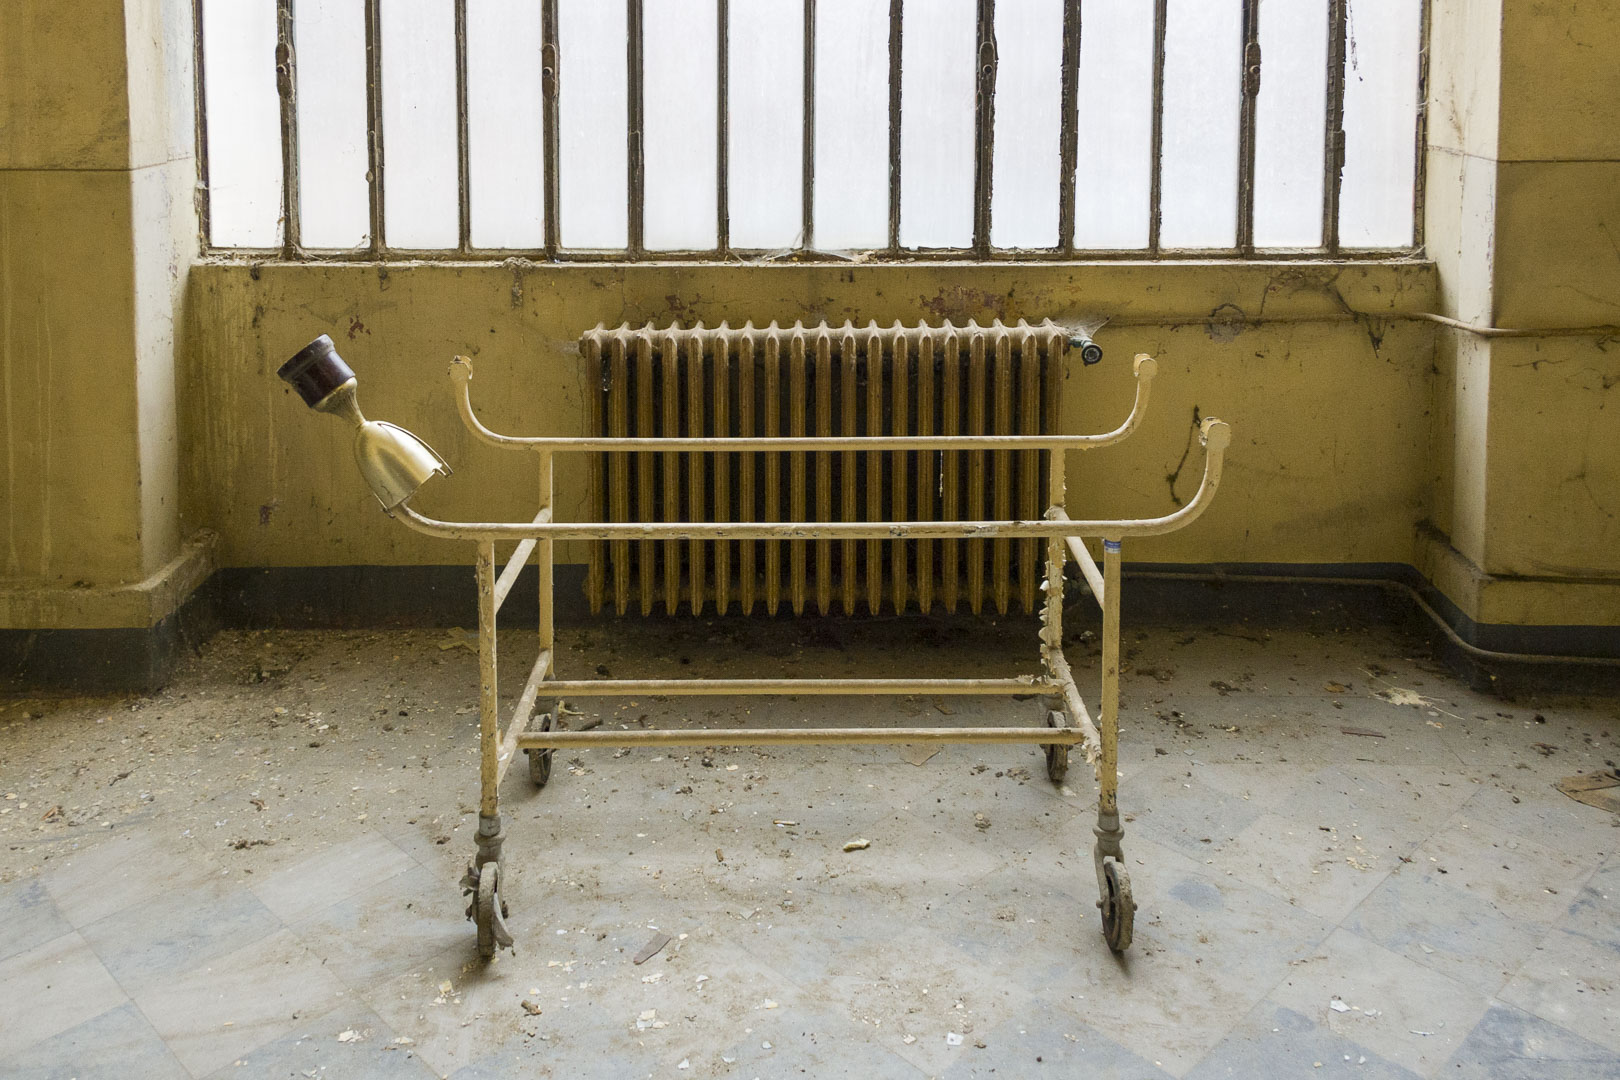 Abandoned Mental Asylum – Racconigi, Italy